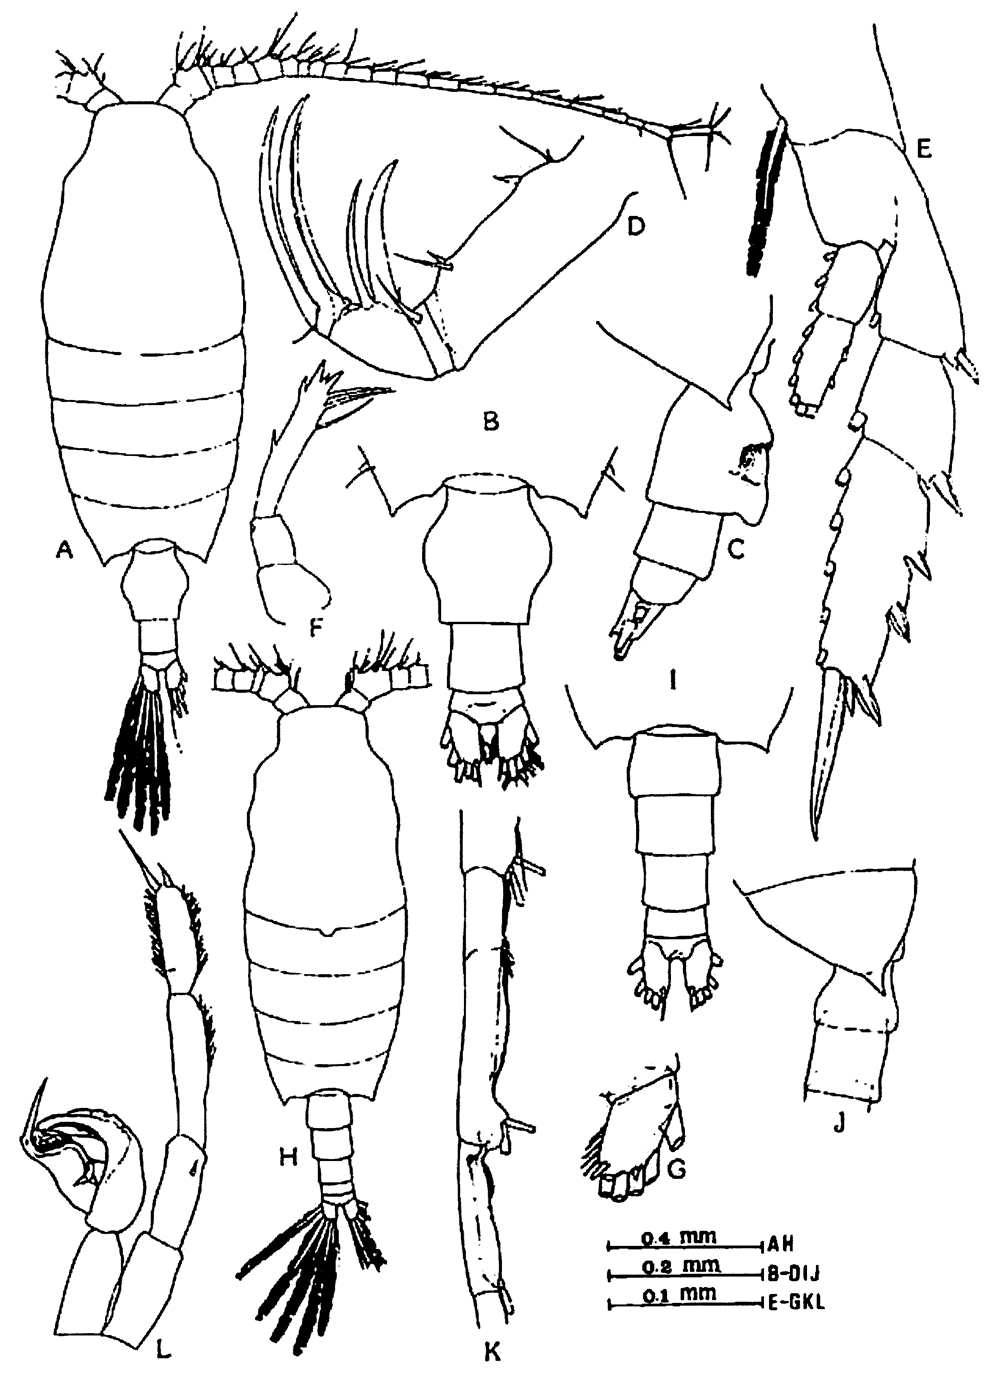 Espce Candacia catula - Planche 8 de figures morphologiques